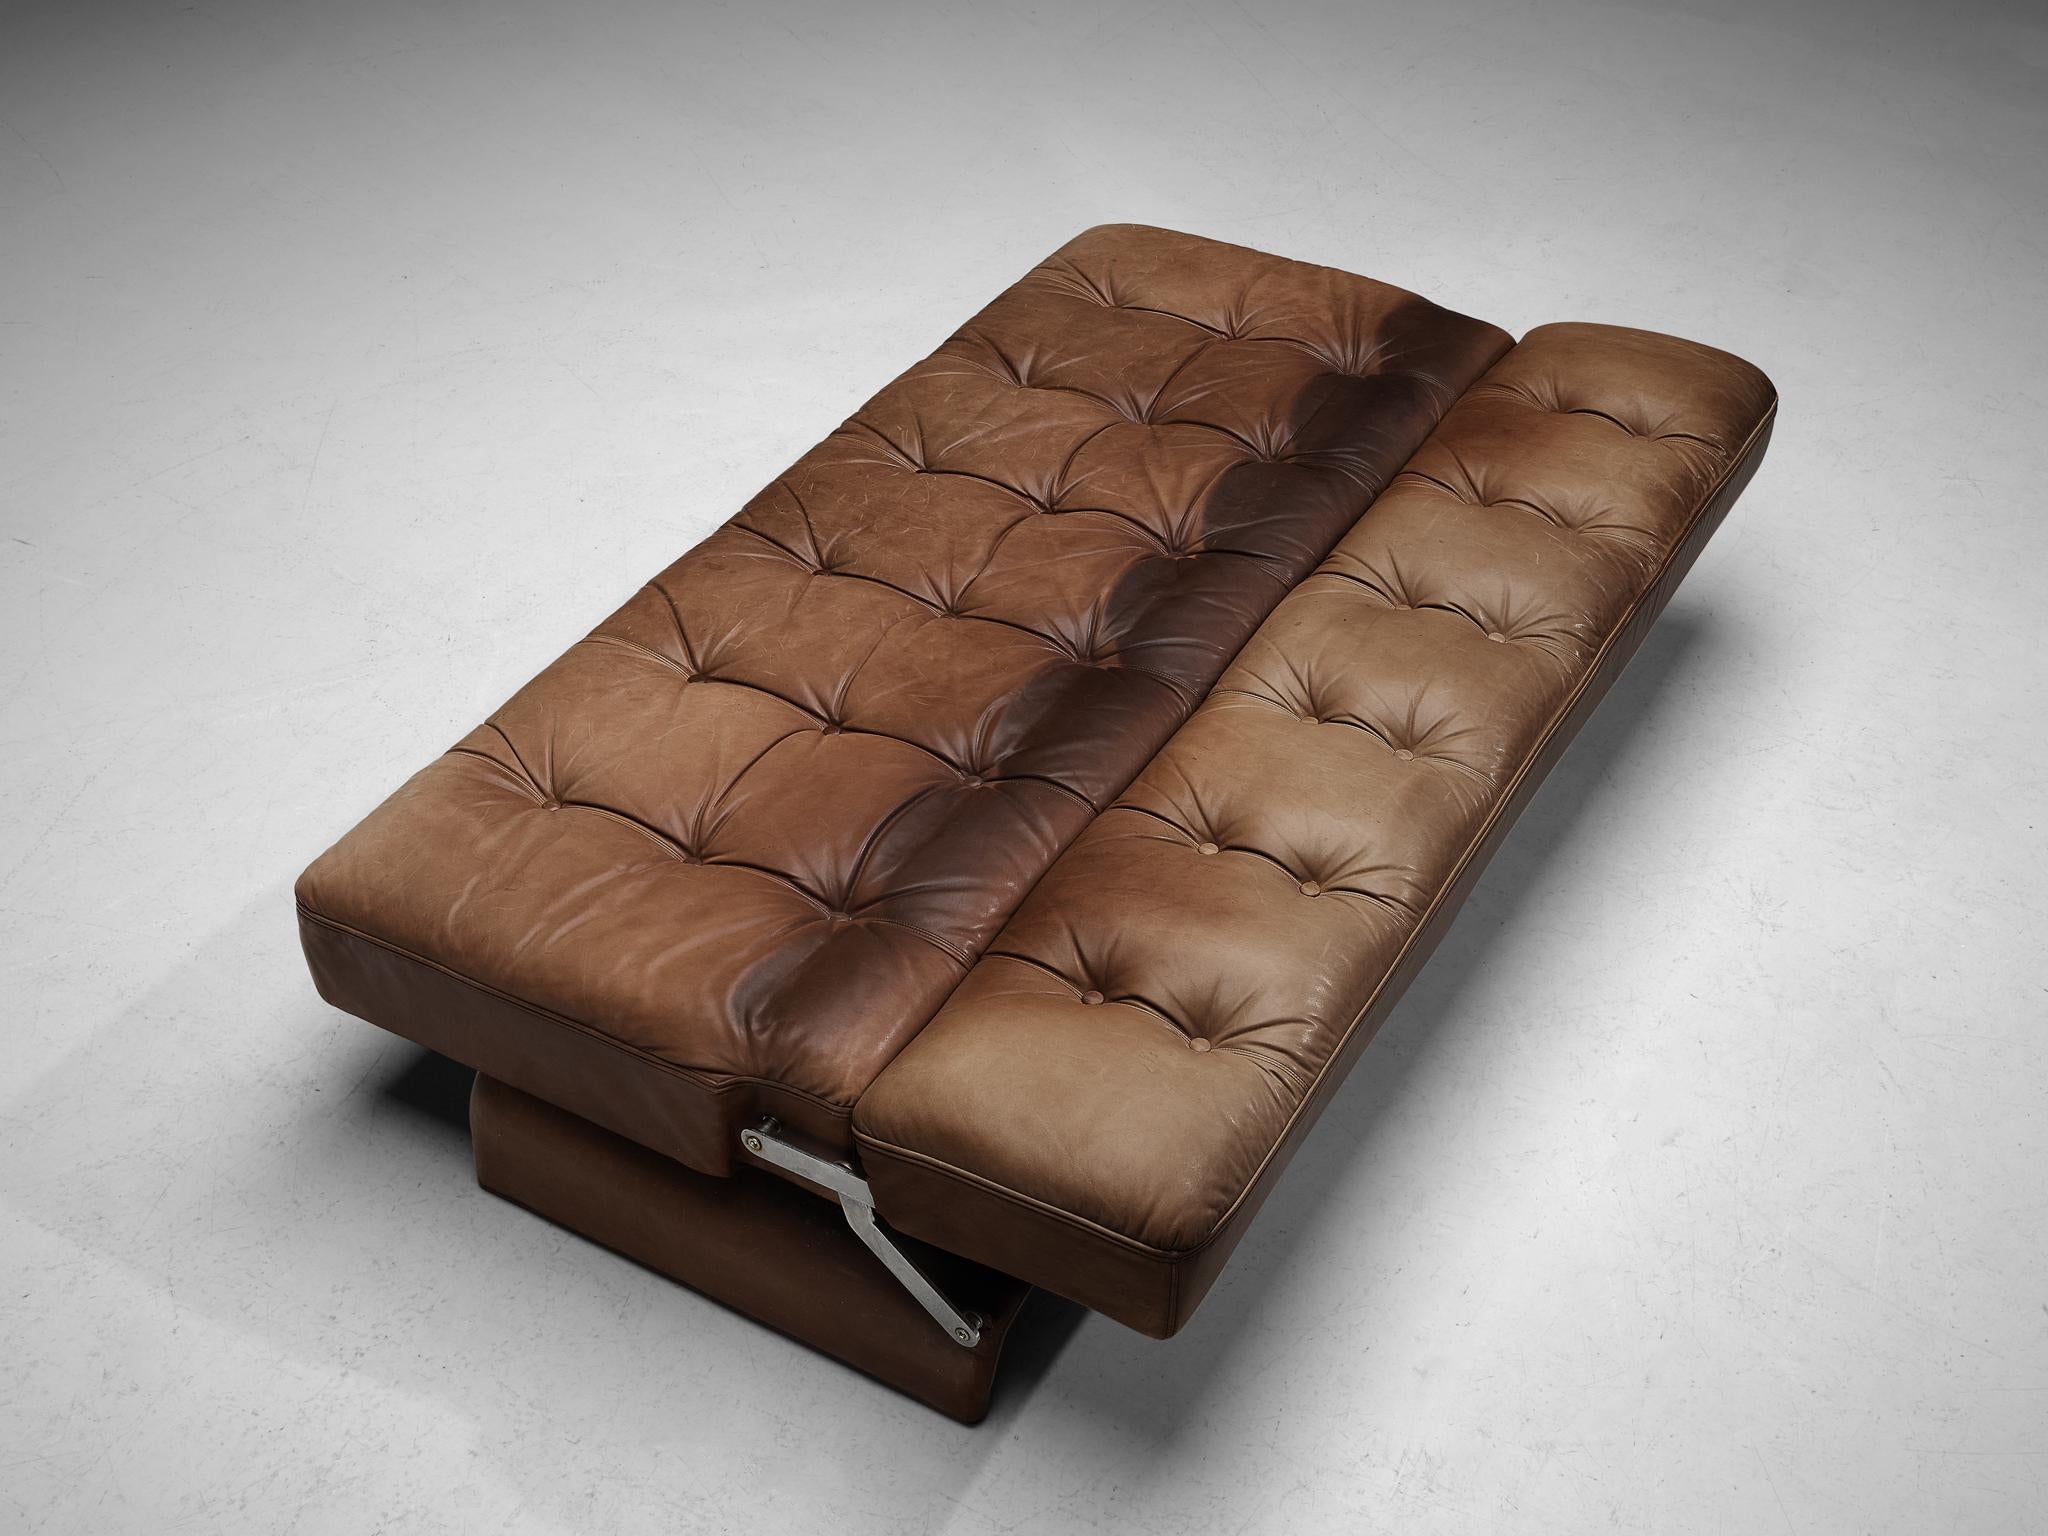 Johannes Spalt for Wittmann 'Constanze' Sofa in Cognac Leather 1